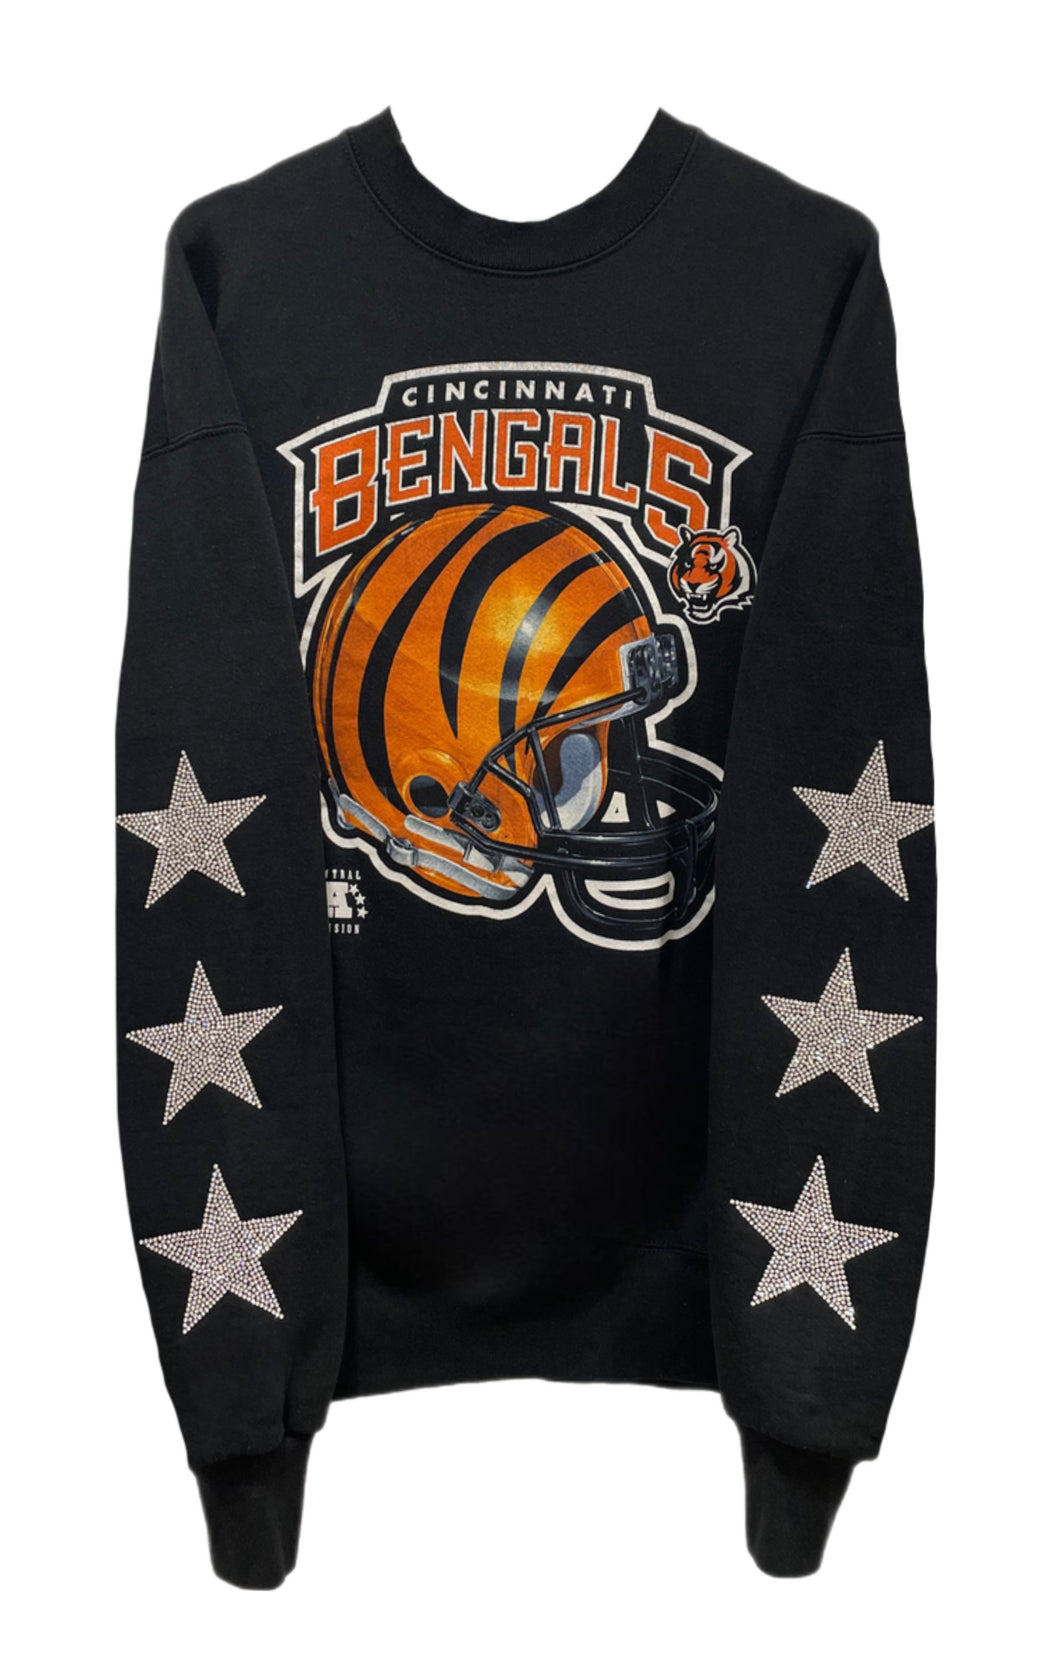 Cincinnati Bengals, NFL One of a KIND Vintage ”Rare Find”  Sweatshirt with Three Crystal Star Design